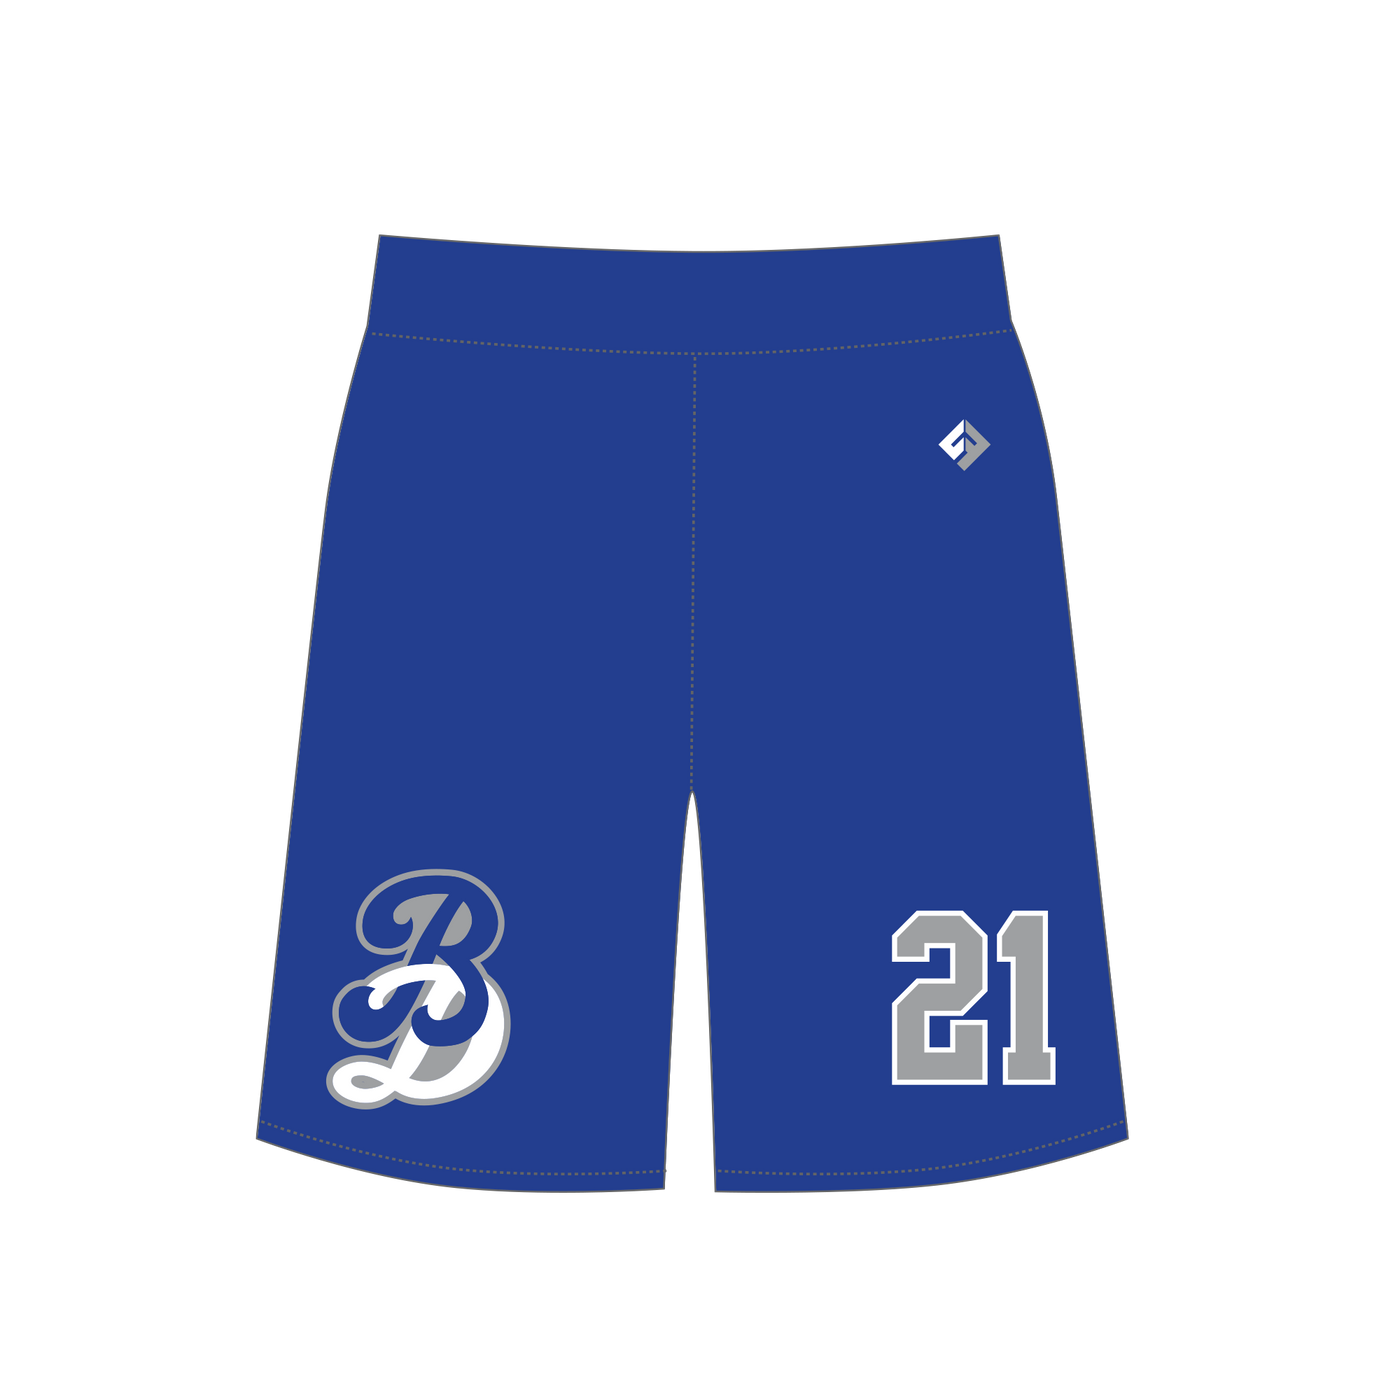 Brooklyn Dodgers: Uniforms, PMell2293